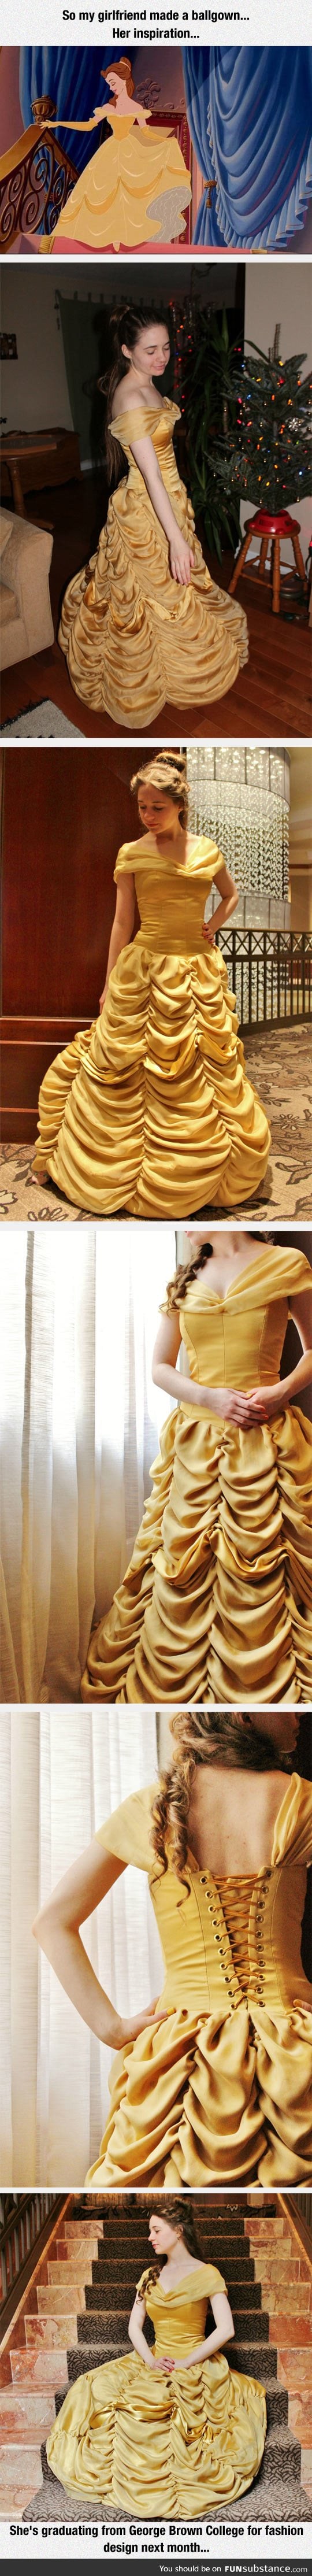 Beautiful dress inspired by a Disney princess